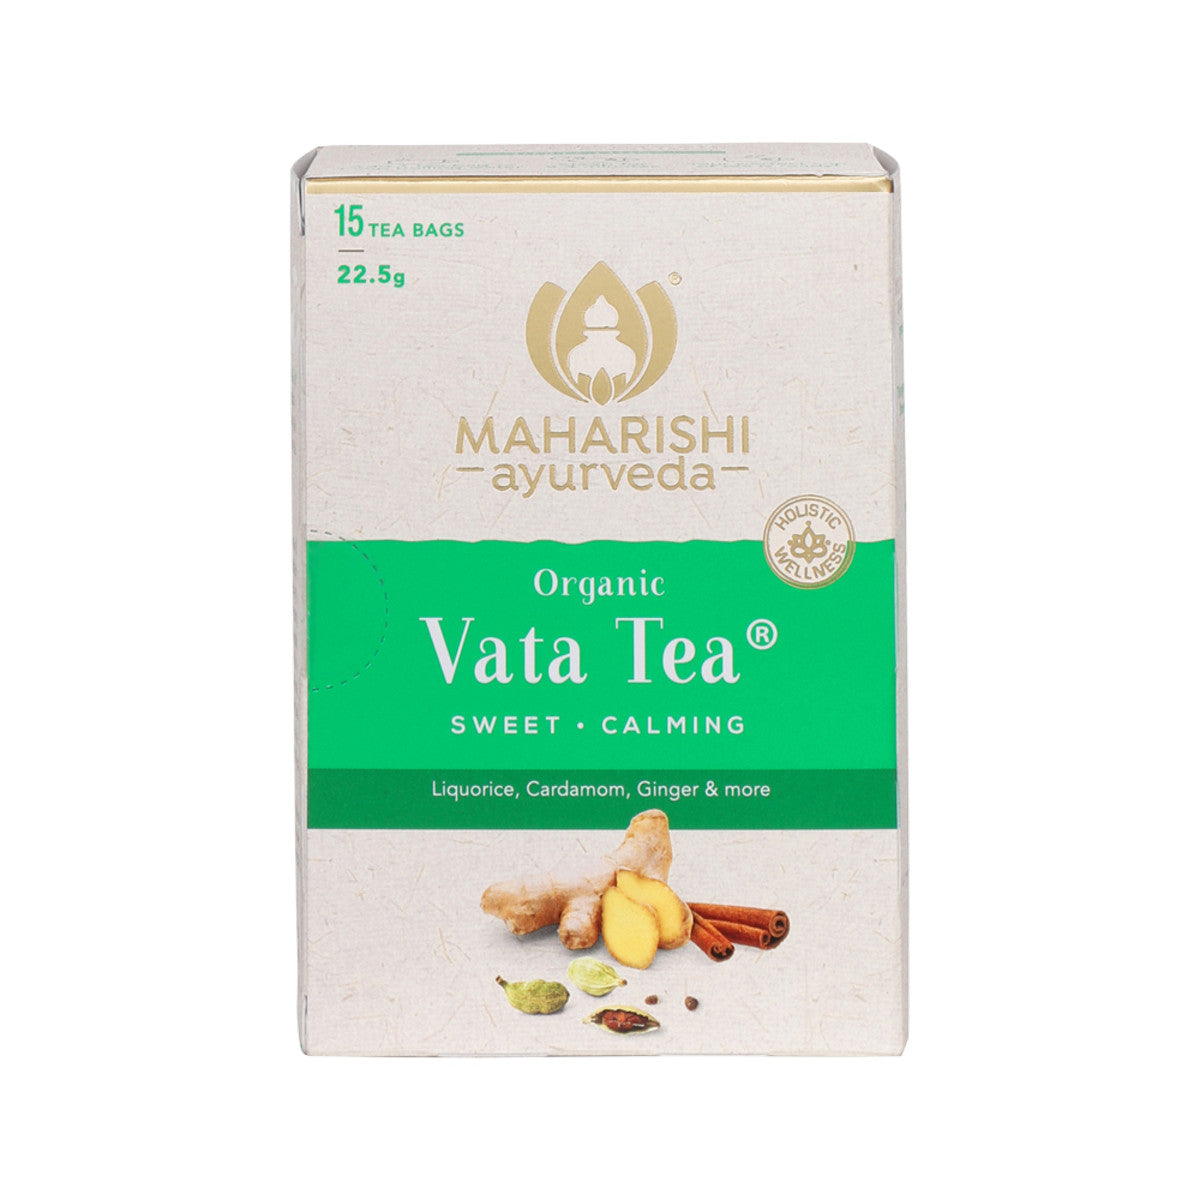 Maharishi Ayurveda Organic Vata Tea 15 Tea Bags, Sweet Calming